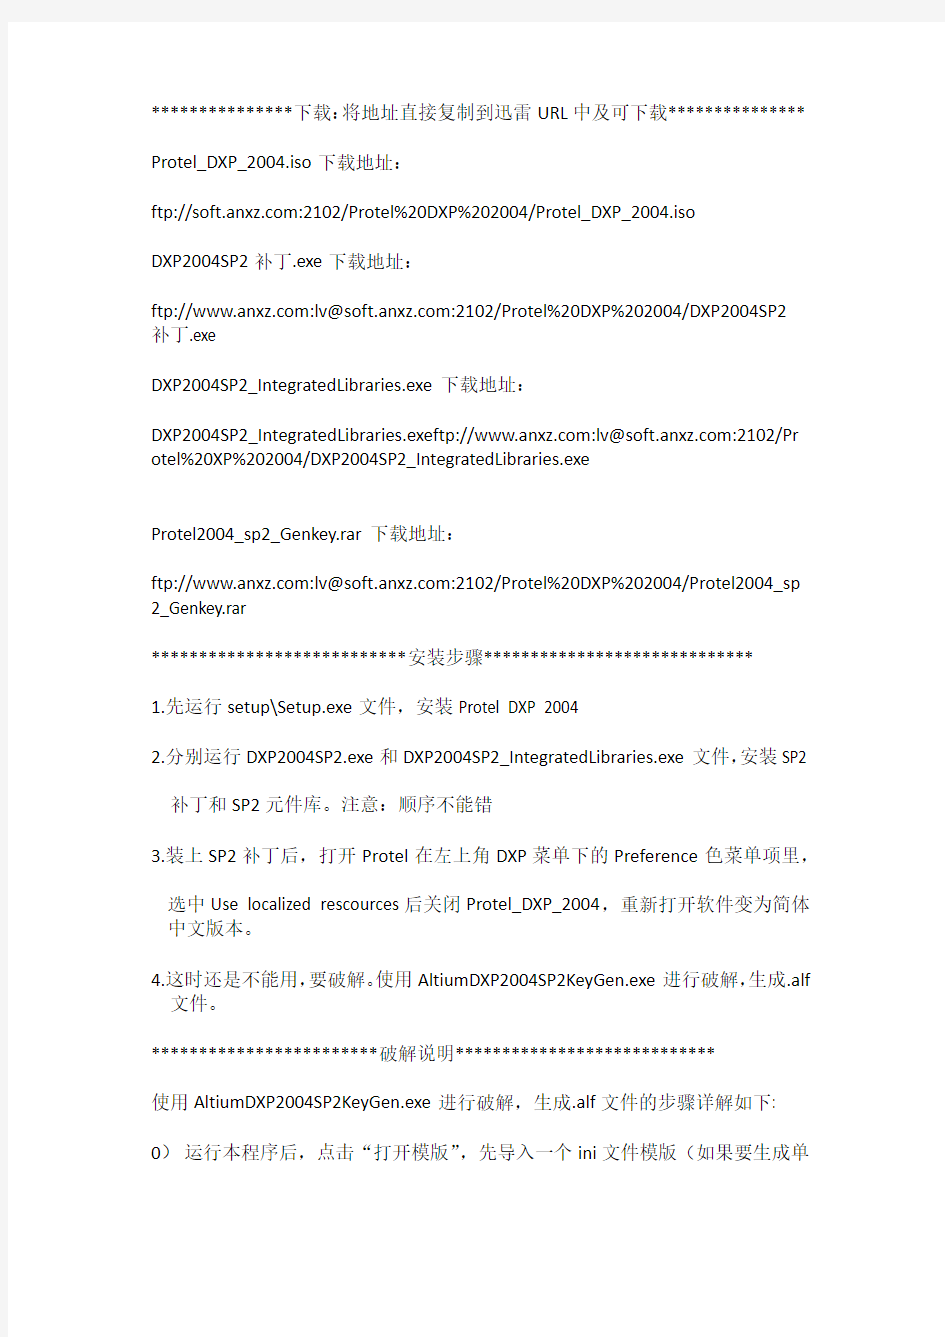 Protel_DXP_2004简体中文下载地址+安装+破解全步骤详解